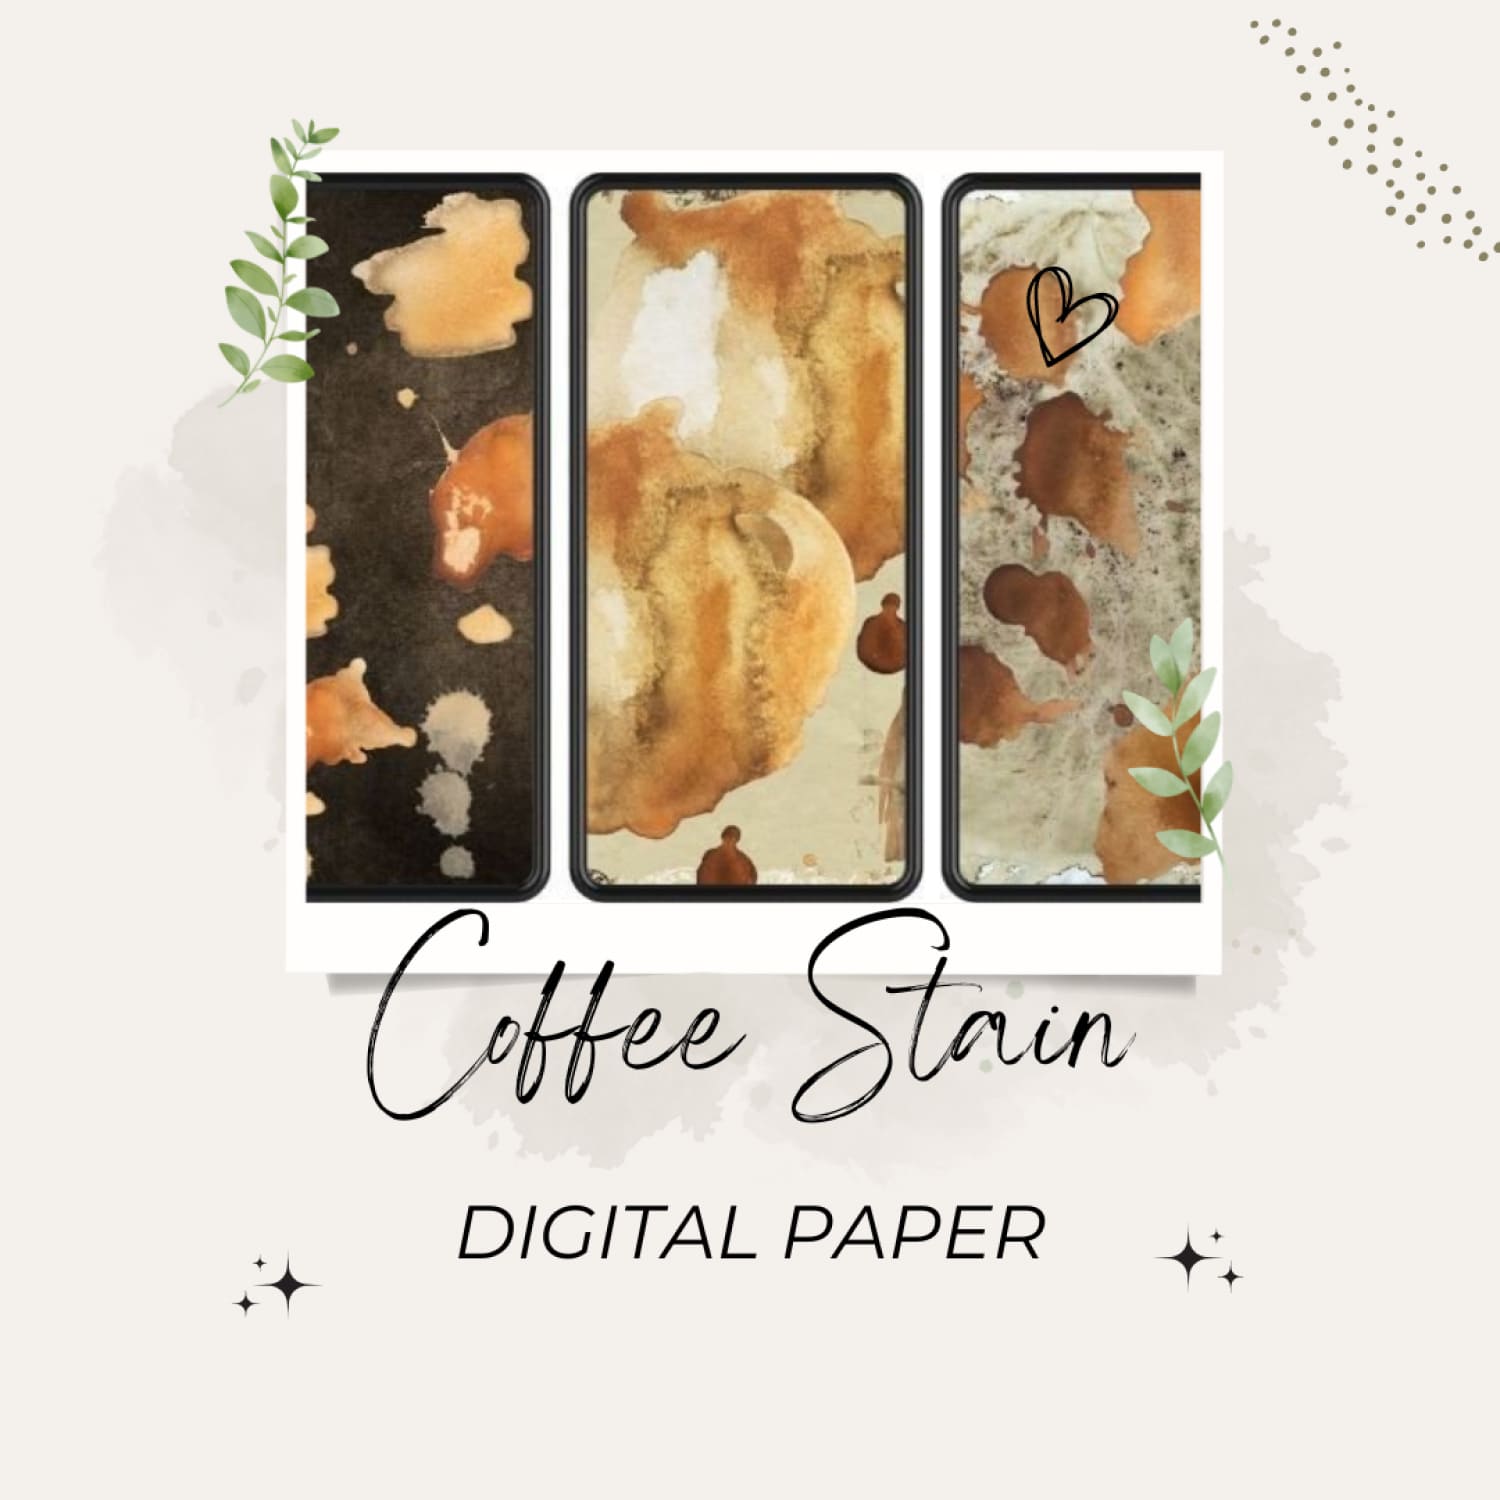 14 Coffee Stain Digital Paper.